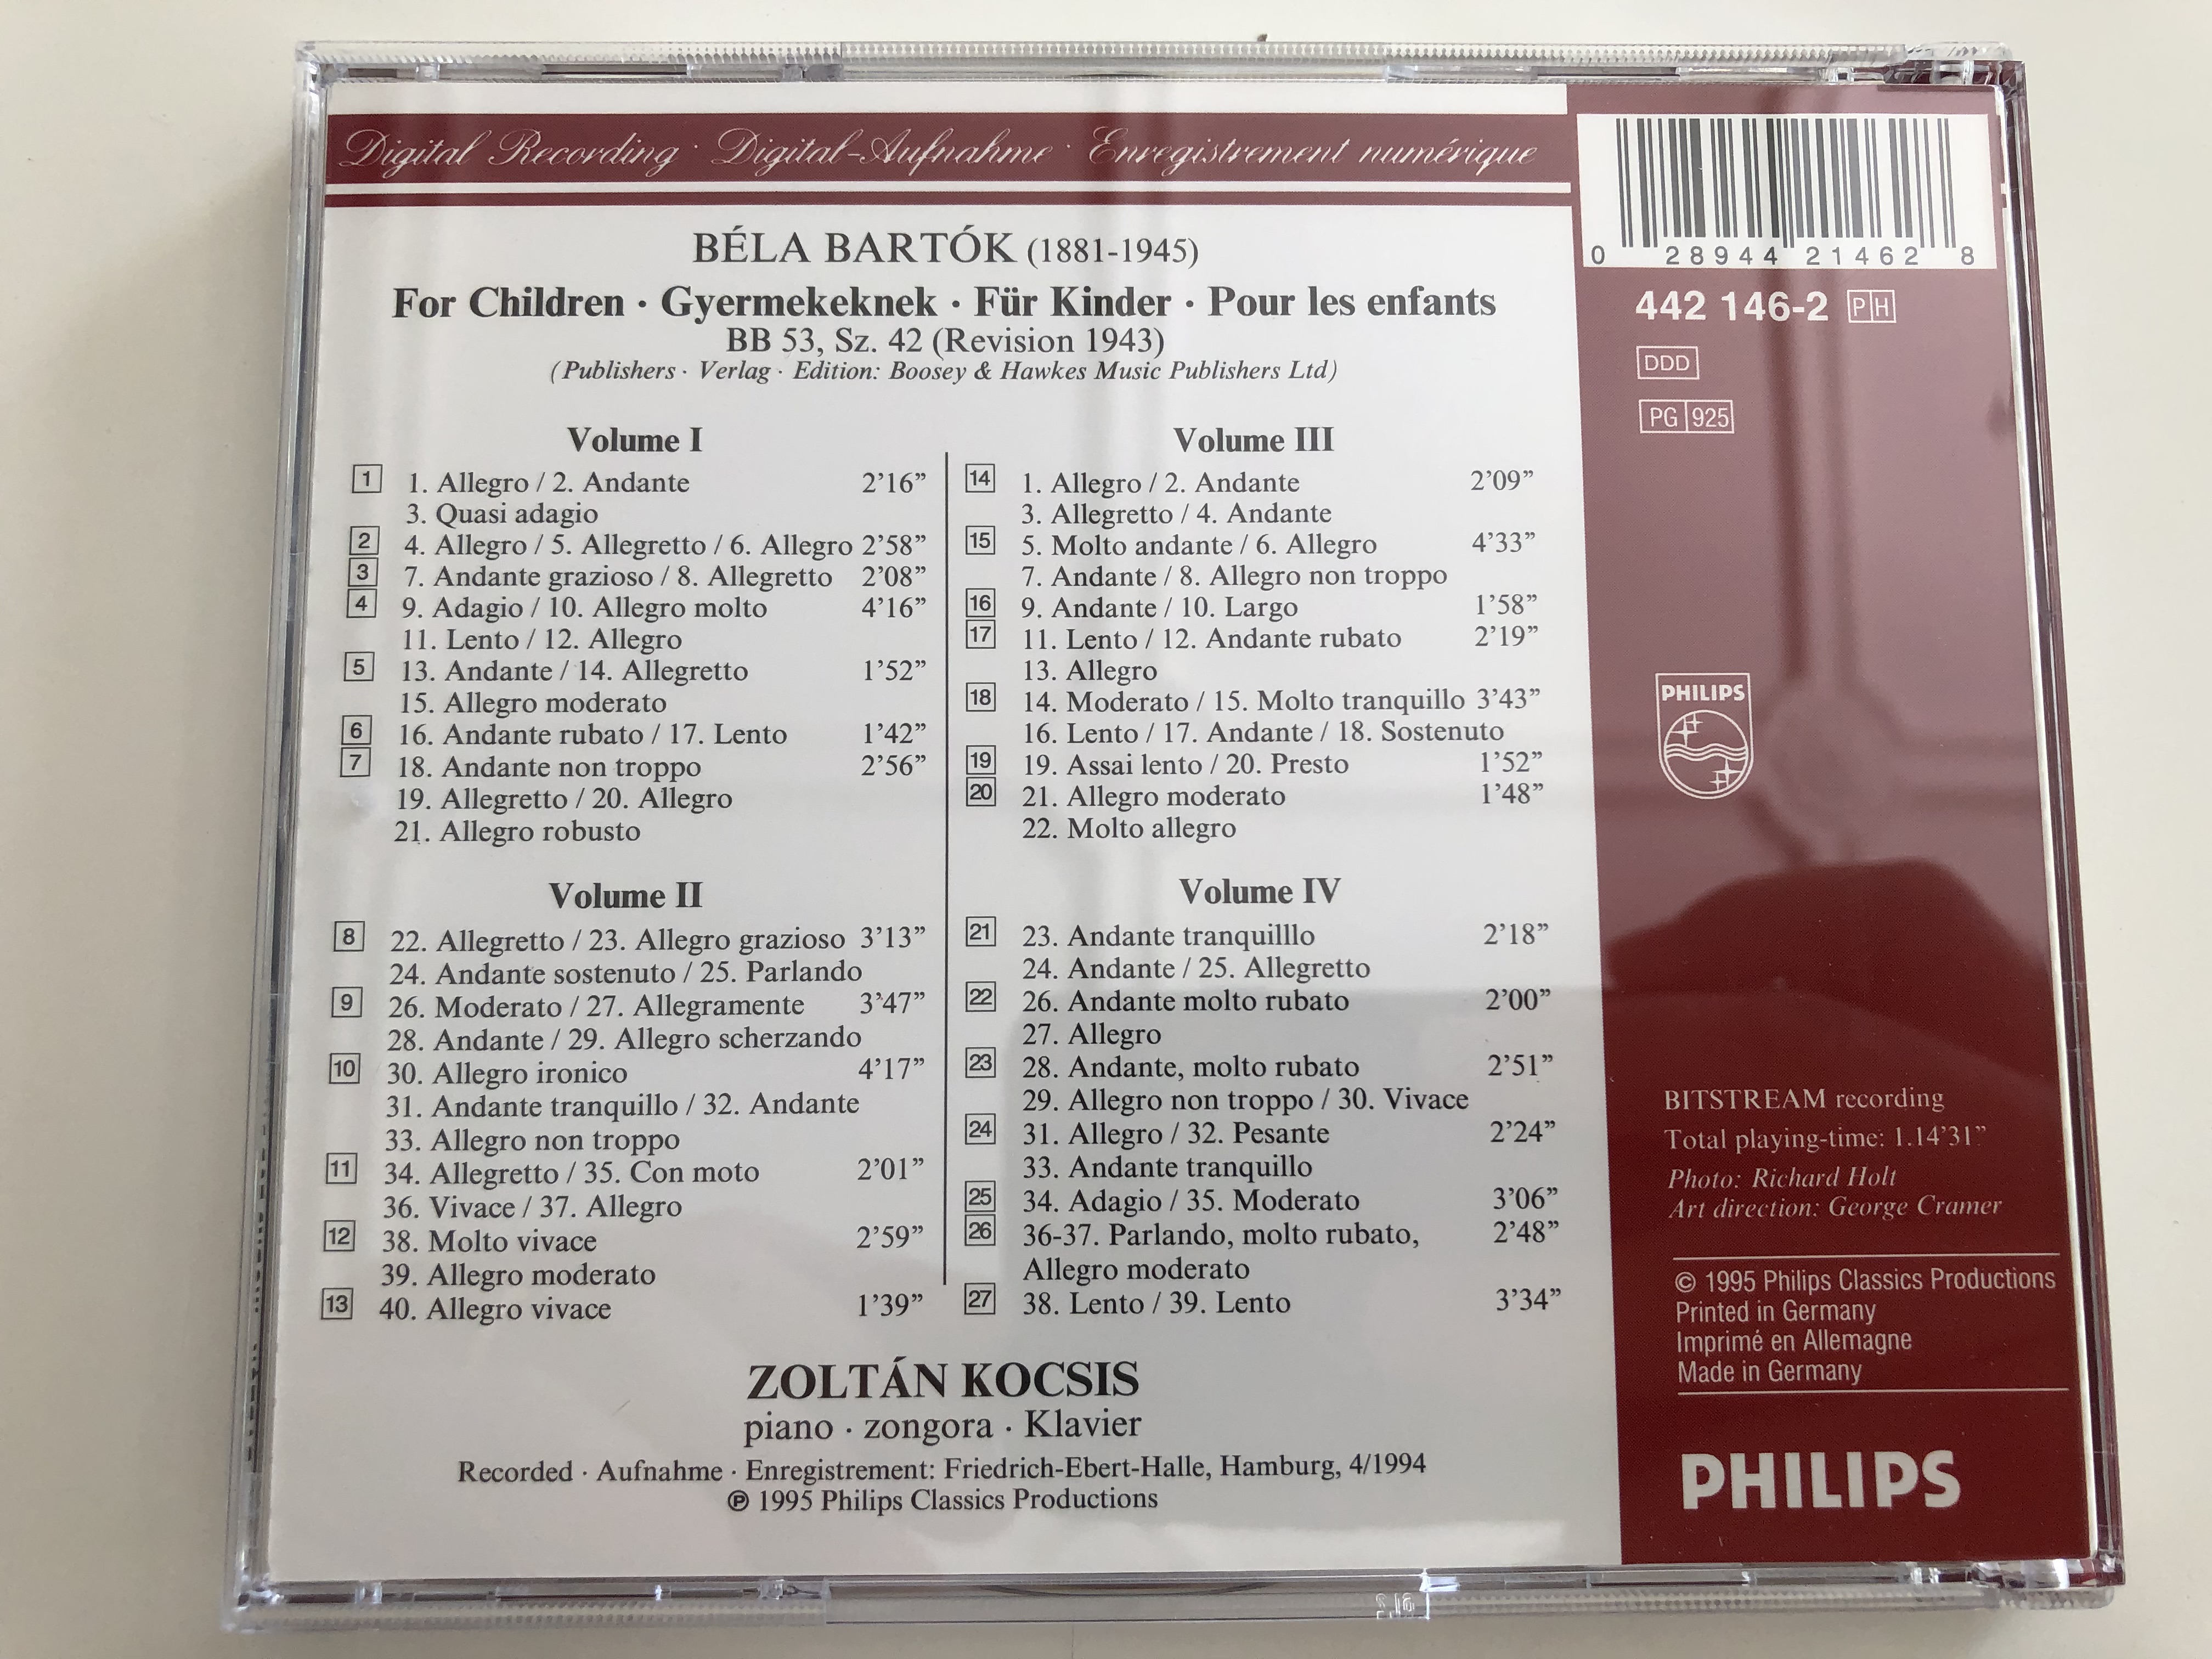 b-la-bart-k-works-for-piano-solo-3-zolt-n-kocsis-piano-philips-digital-classics-audio-cd-1995-442-146-2-10-.jpg